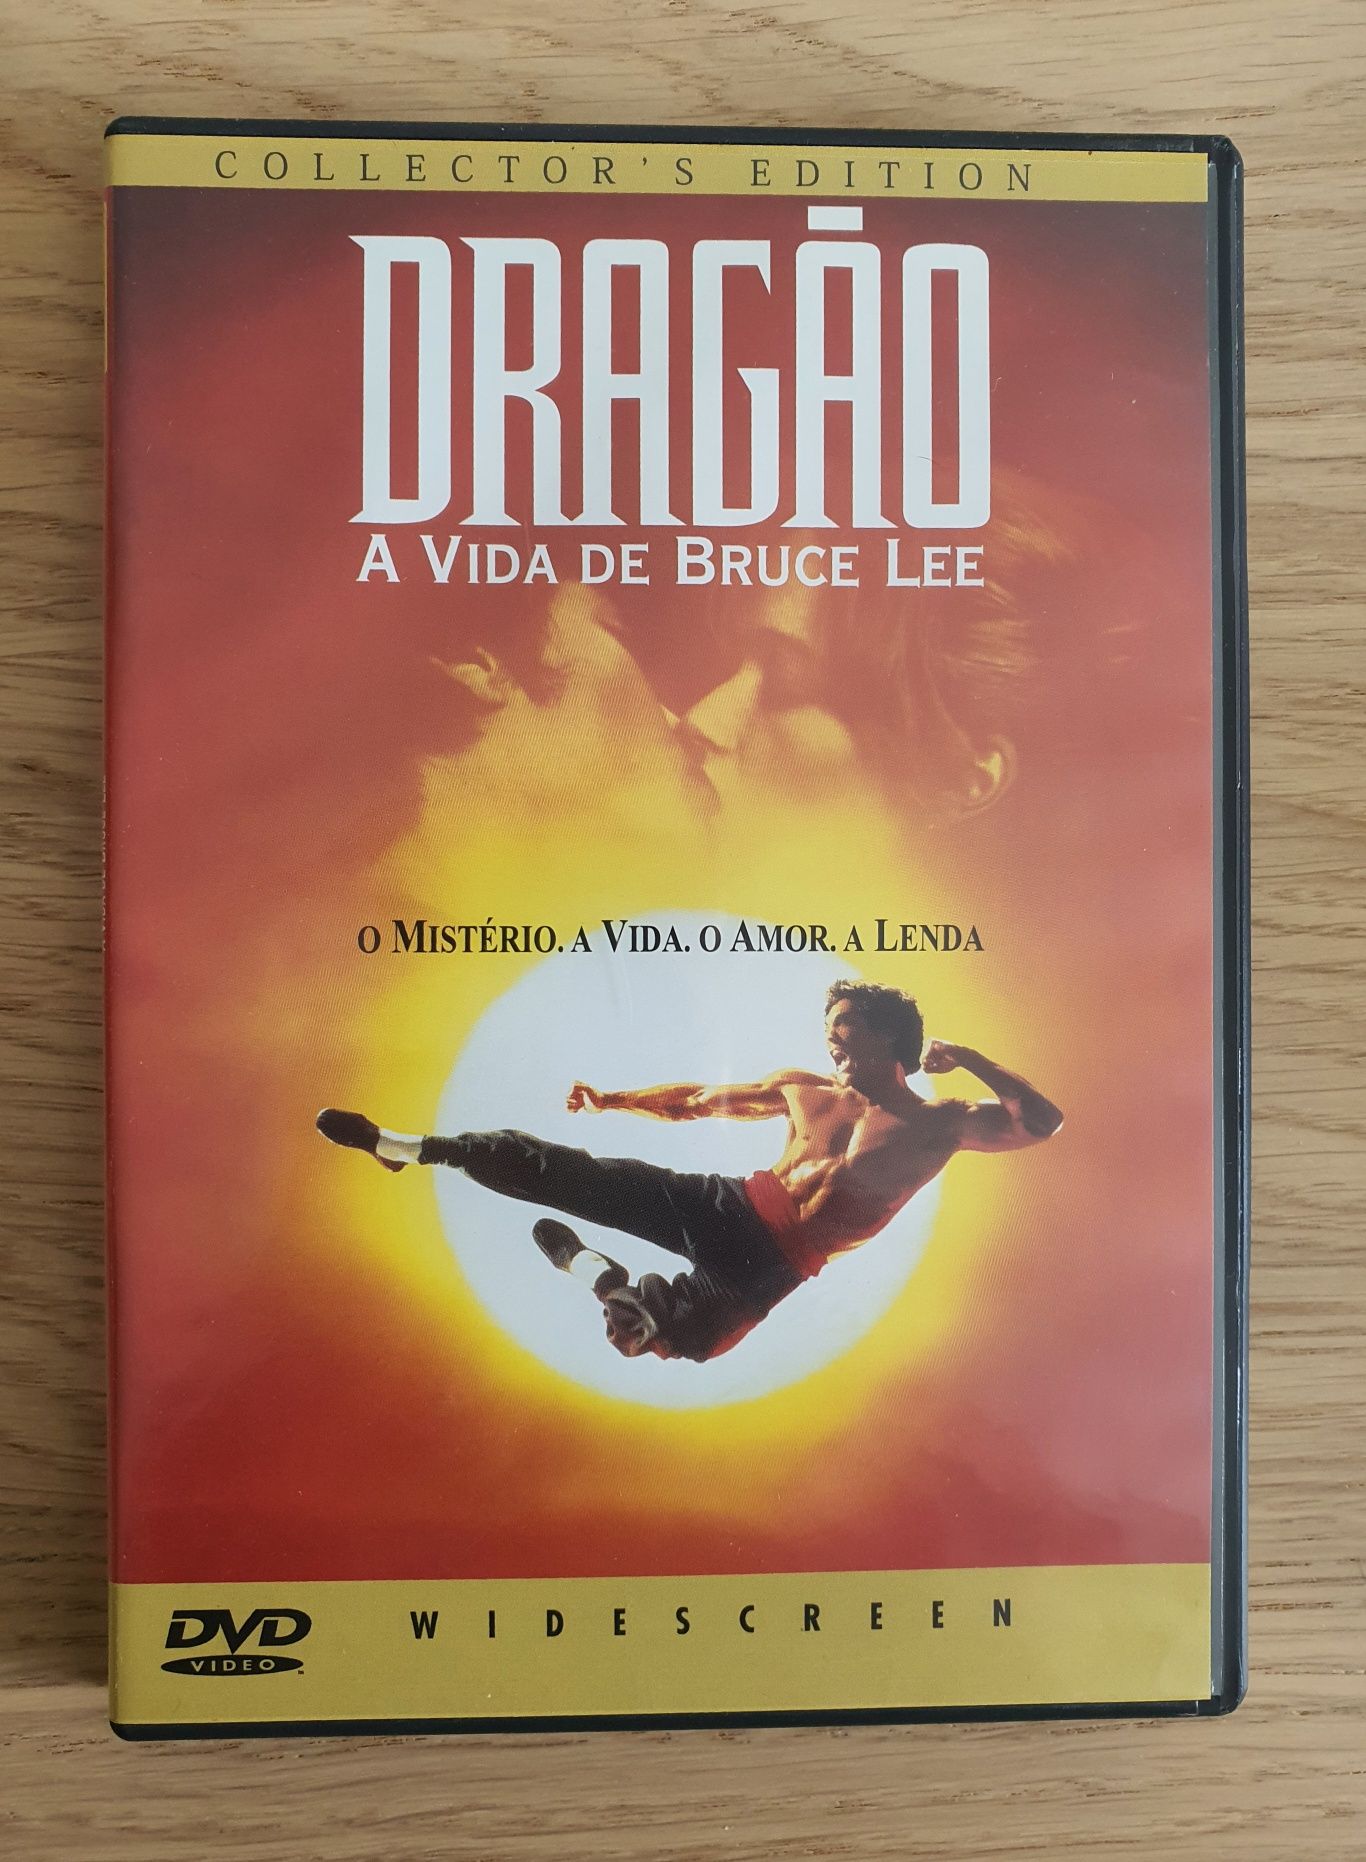 Dragão A Vida de Bruce Lee (ed. de colecionador)